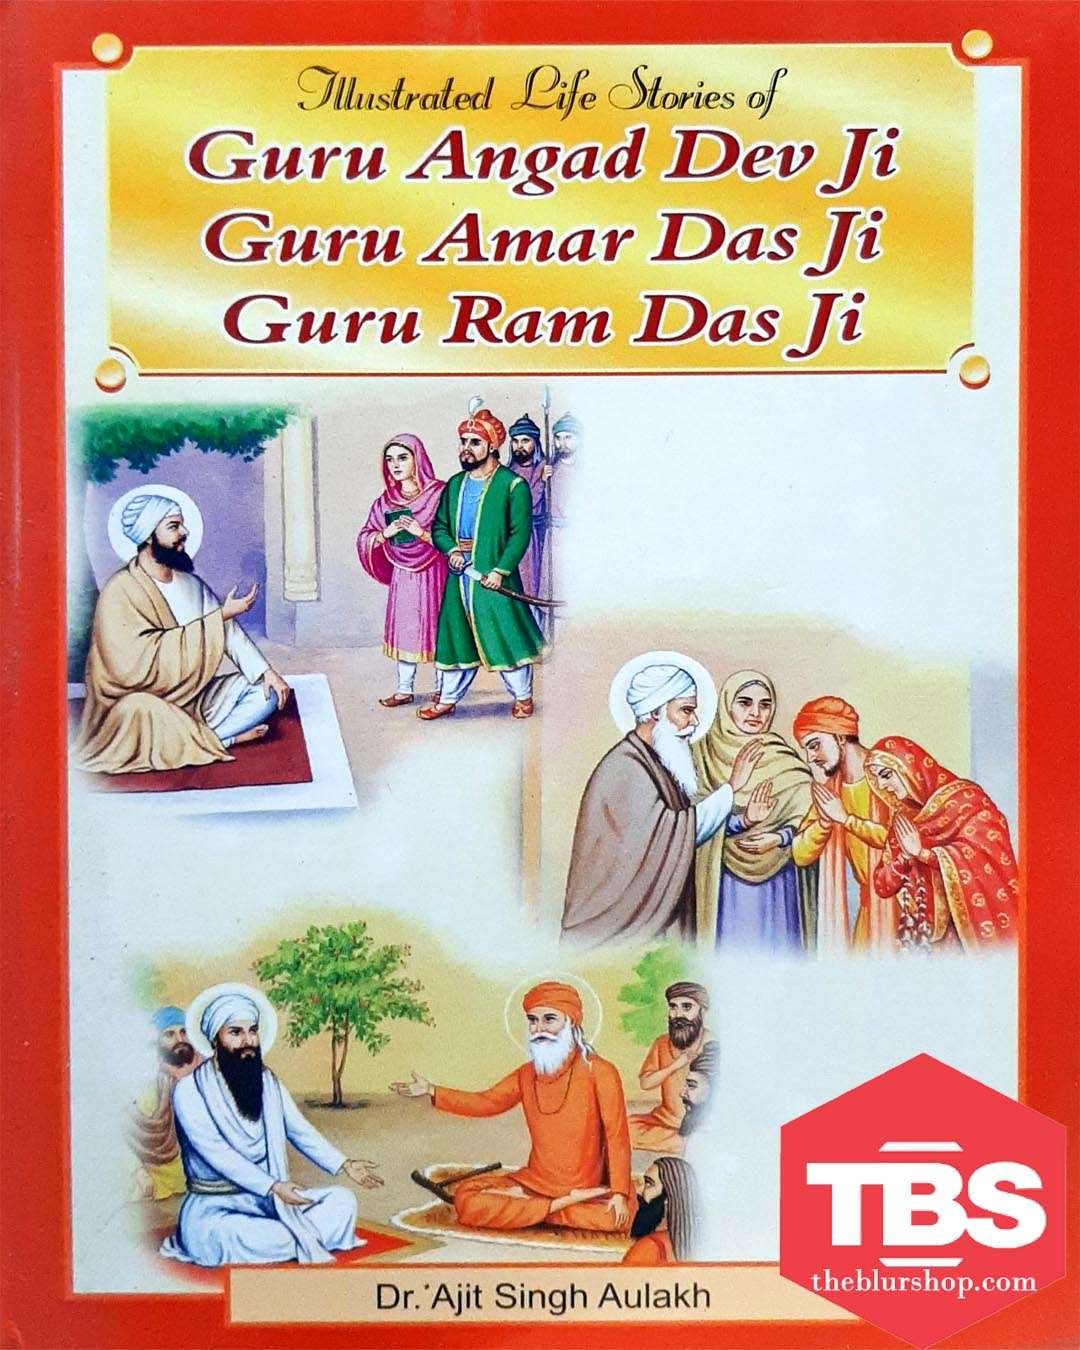 Illustrated Life Stories of Guru Angad Dev Ji, Guru Amar Das ji, Guru Ram Das Ji